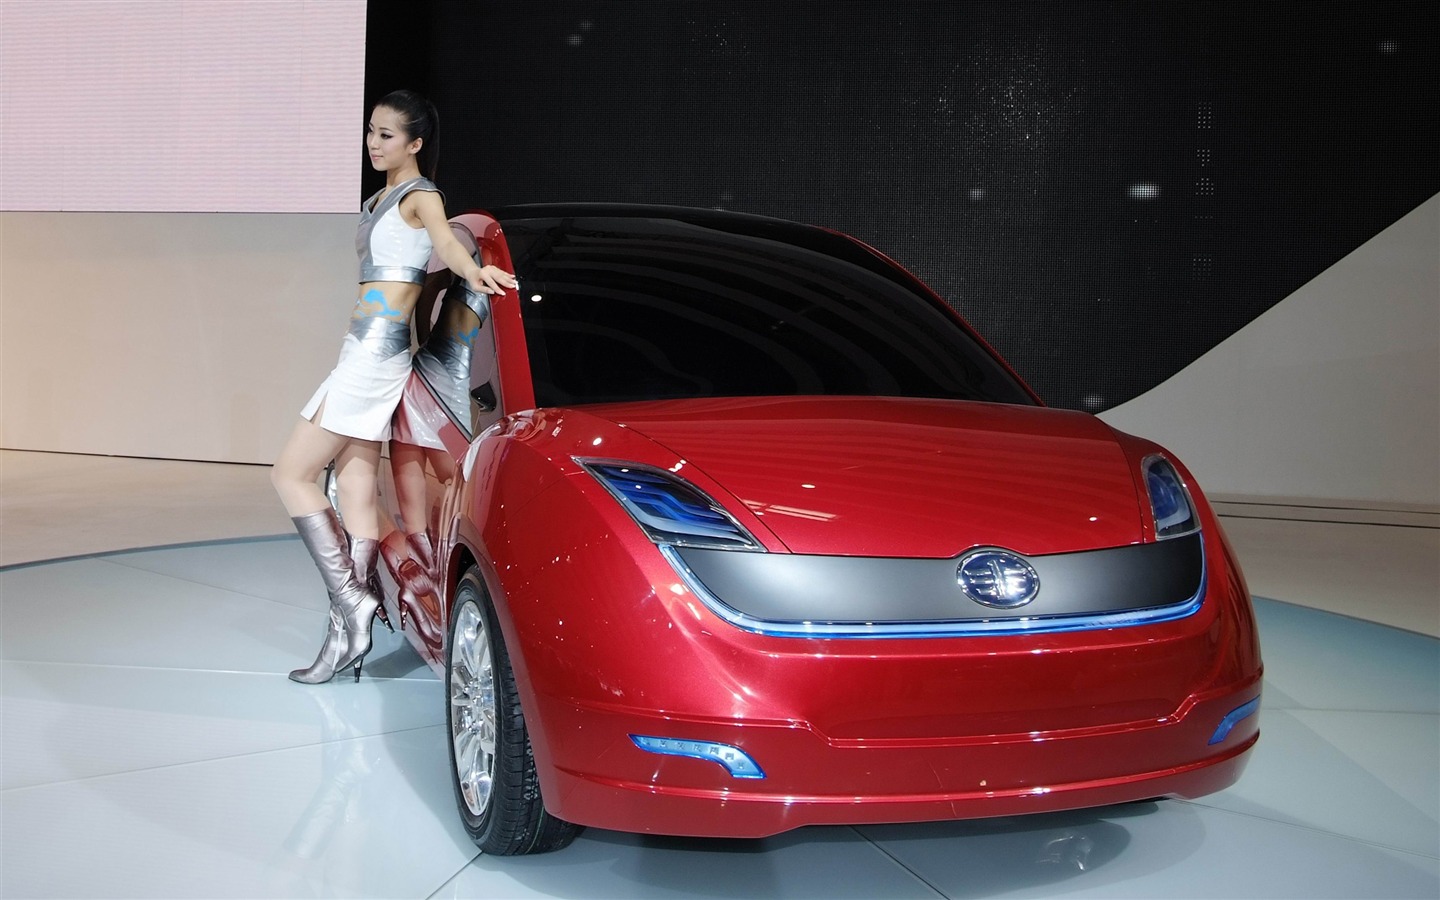 2010 Salón Internacional del Automóvil de Beijing Heung Che belleza (obras barras de refuerzo) #24 - 1440x900